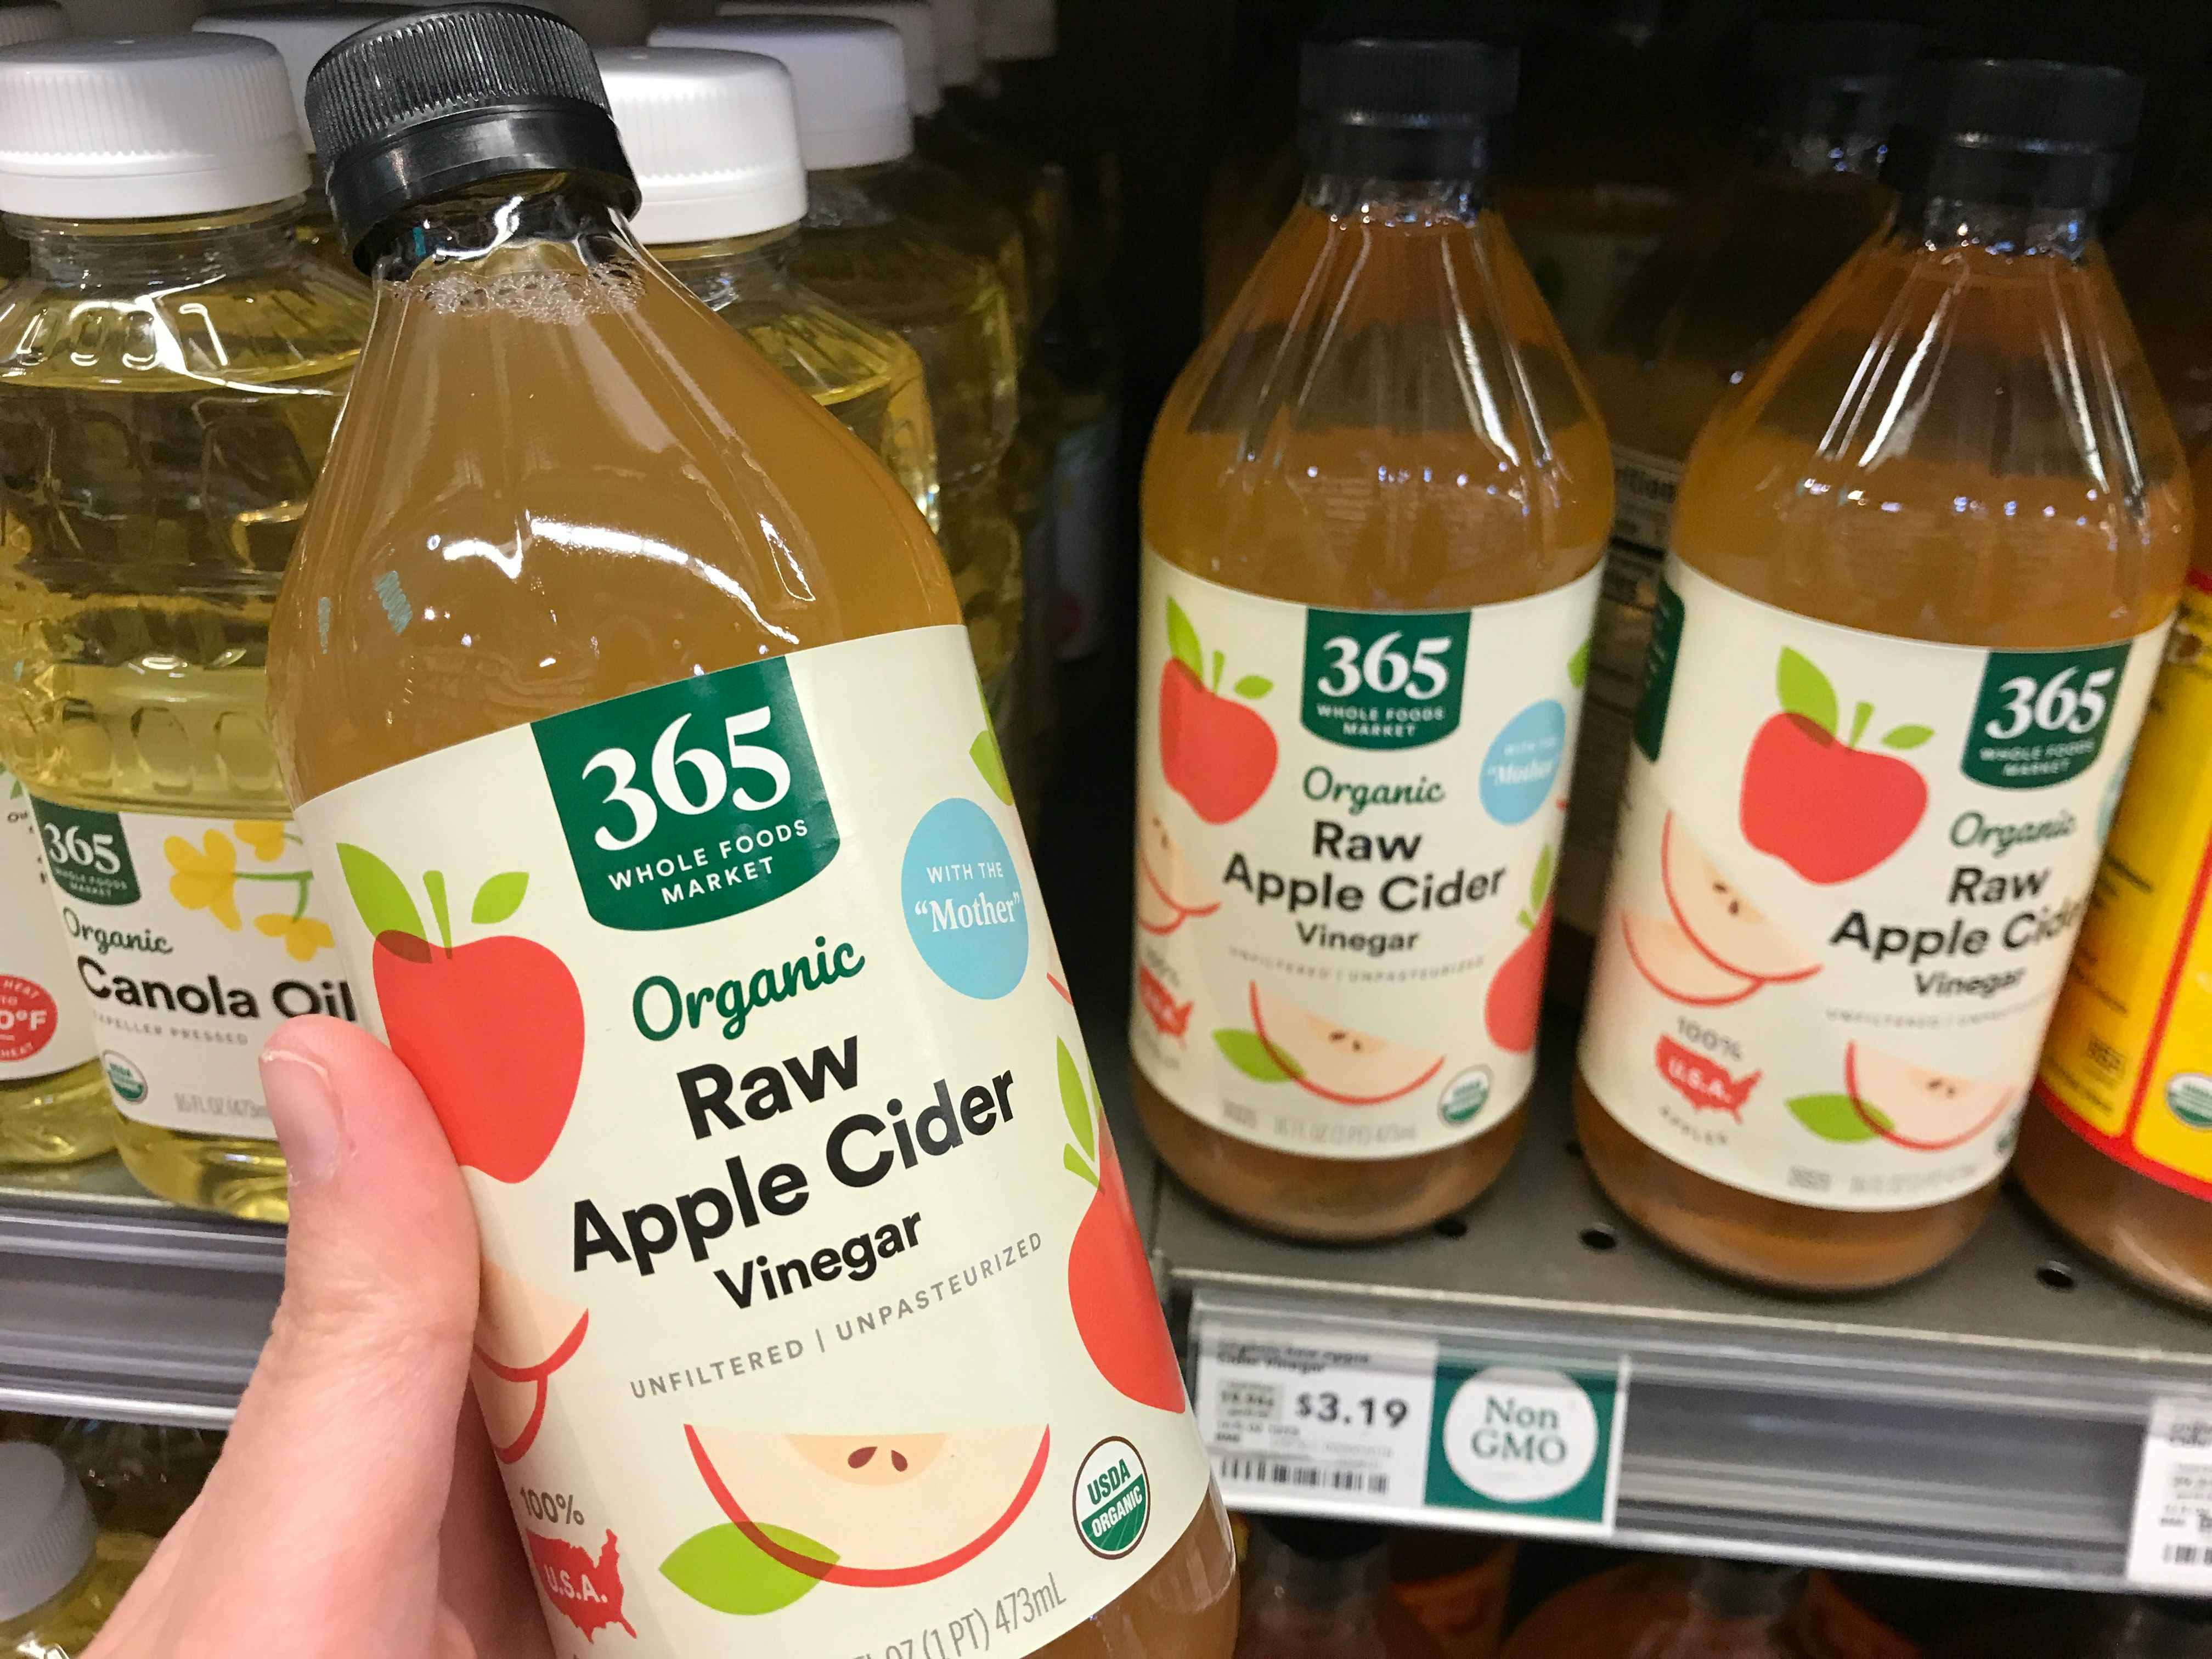 Organic Raw Apple Cider Vinegar, 16 fl oz at Whole Foods Market